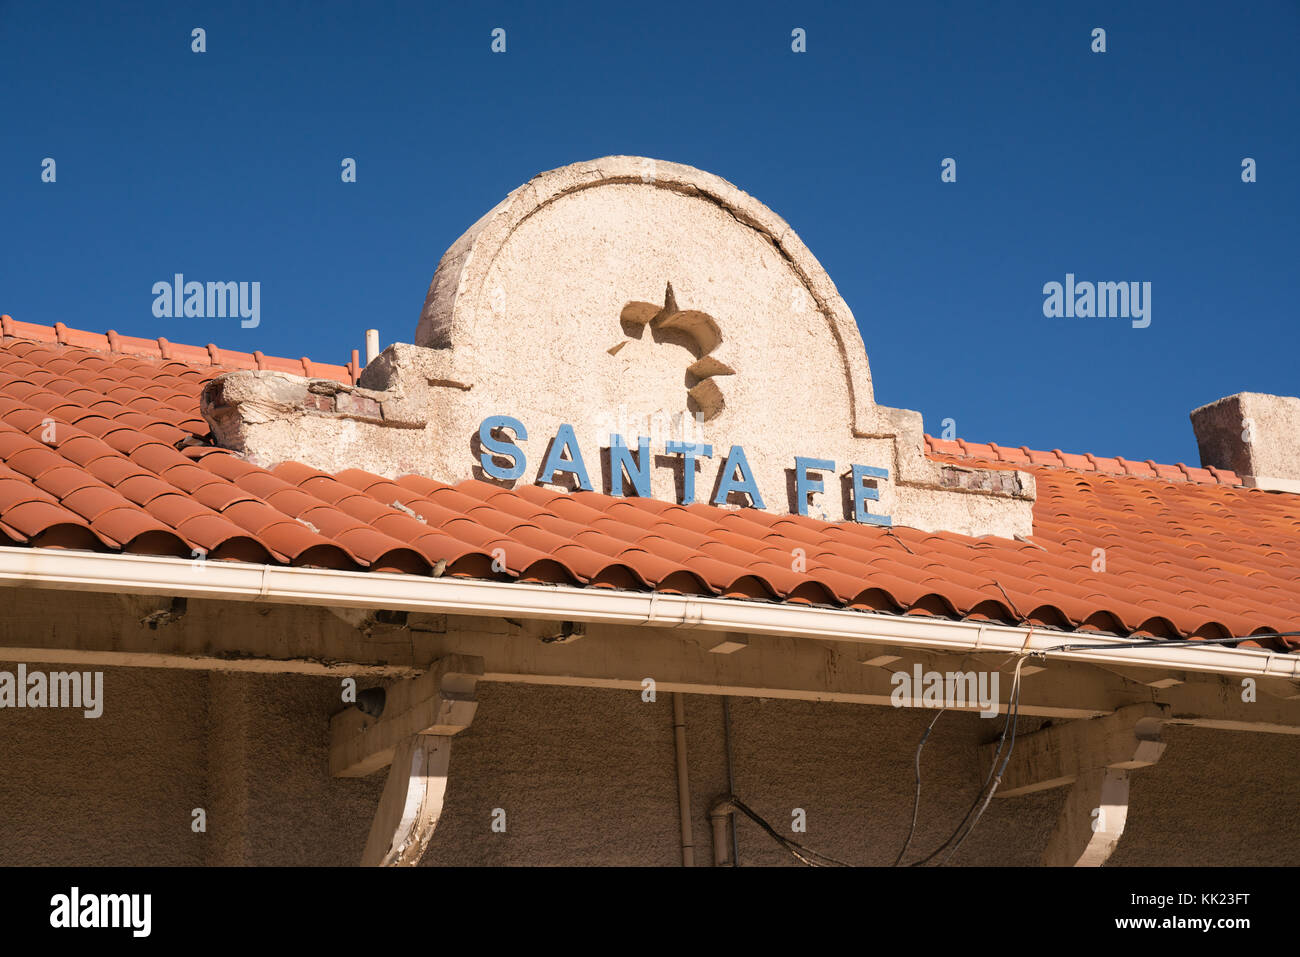 SANTA FE, NM - OCTOBER 13: Santa Fe sign at the entrance to the historic Santa Fe train station on October 13, 2017 Stock Photo